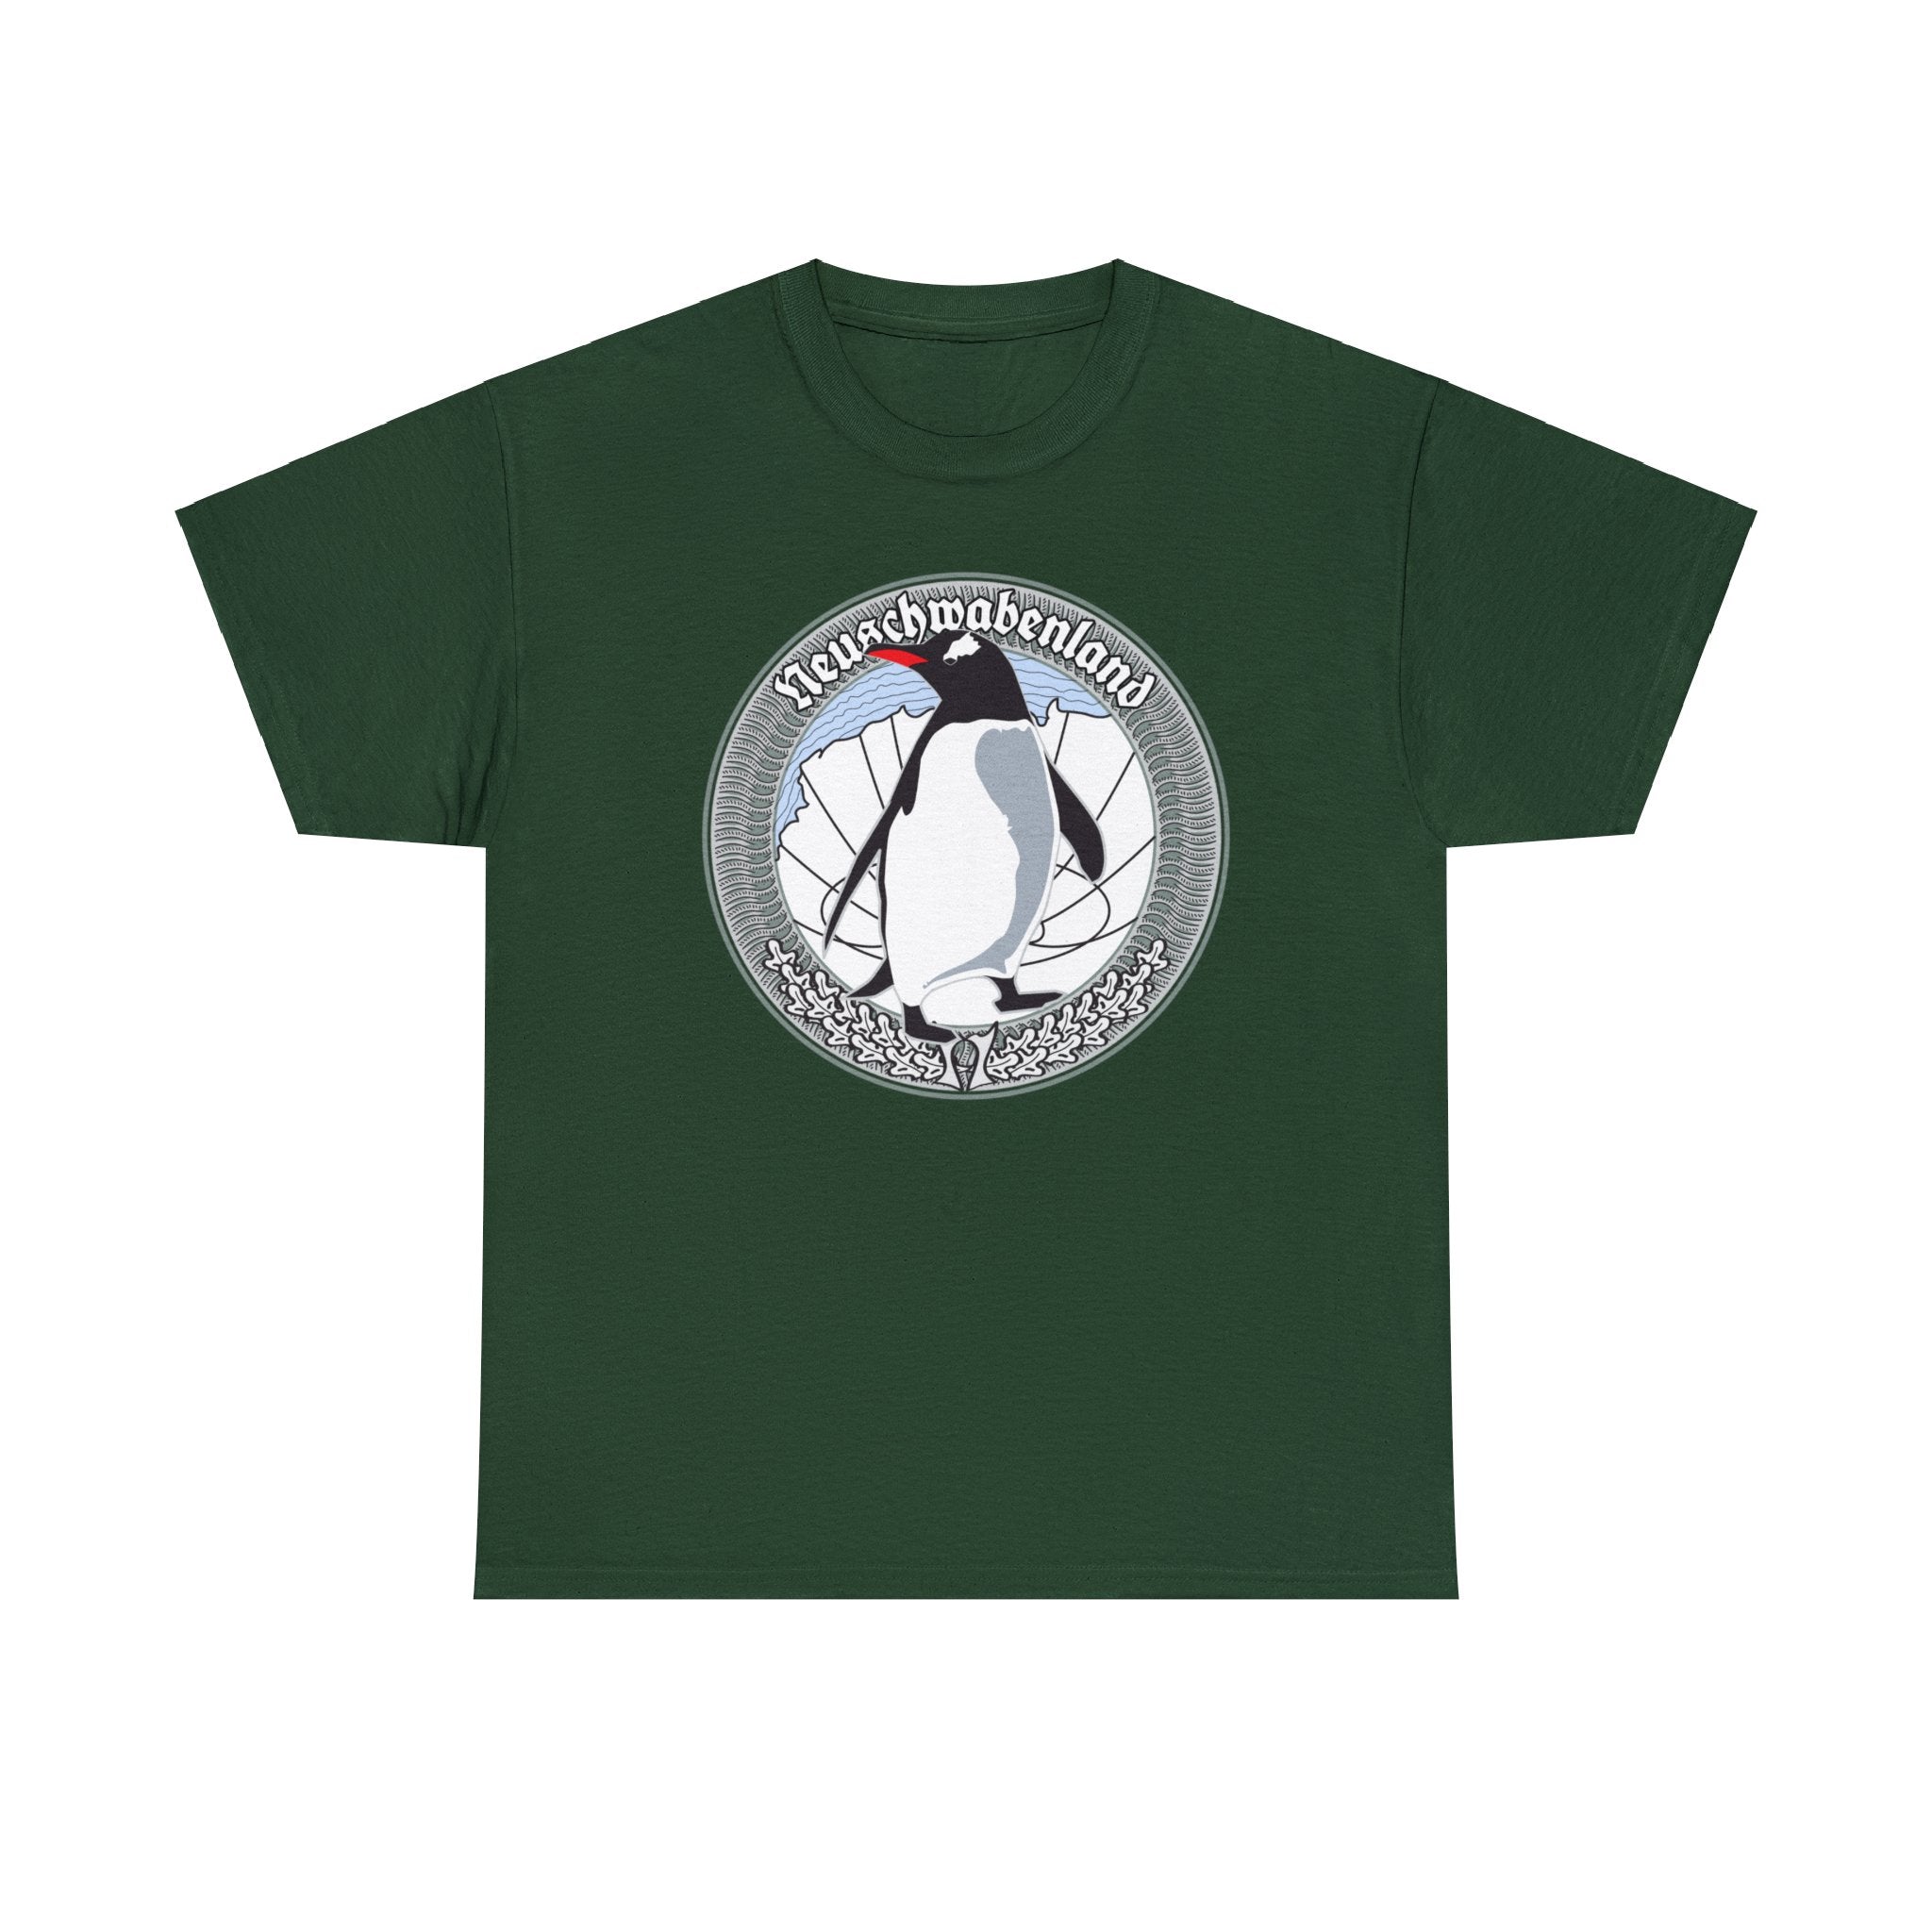 Neuschwabenland Expedition - T-Shirt